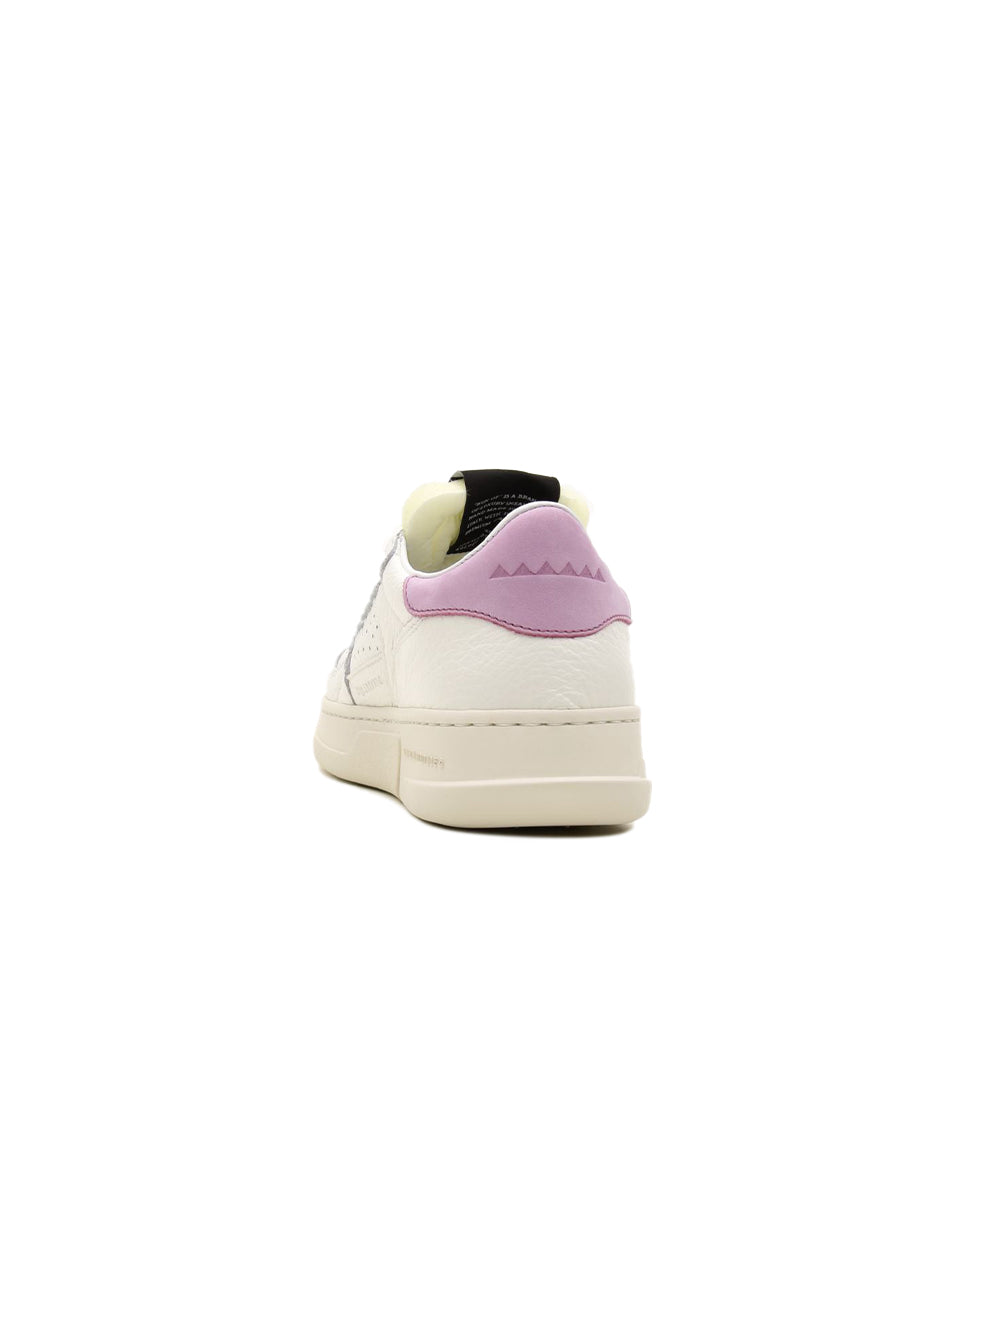 Women's sneakers with pink heel tab